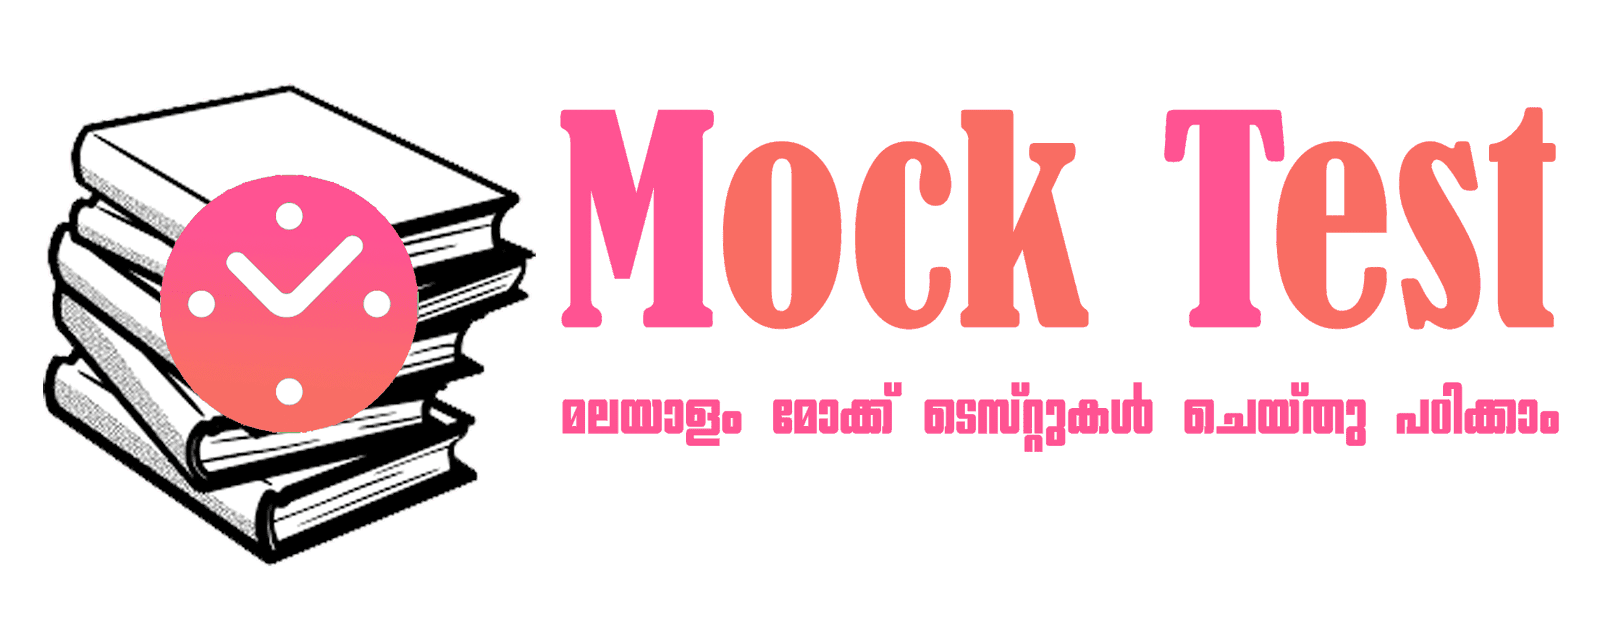 Mock Test Malayalam